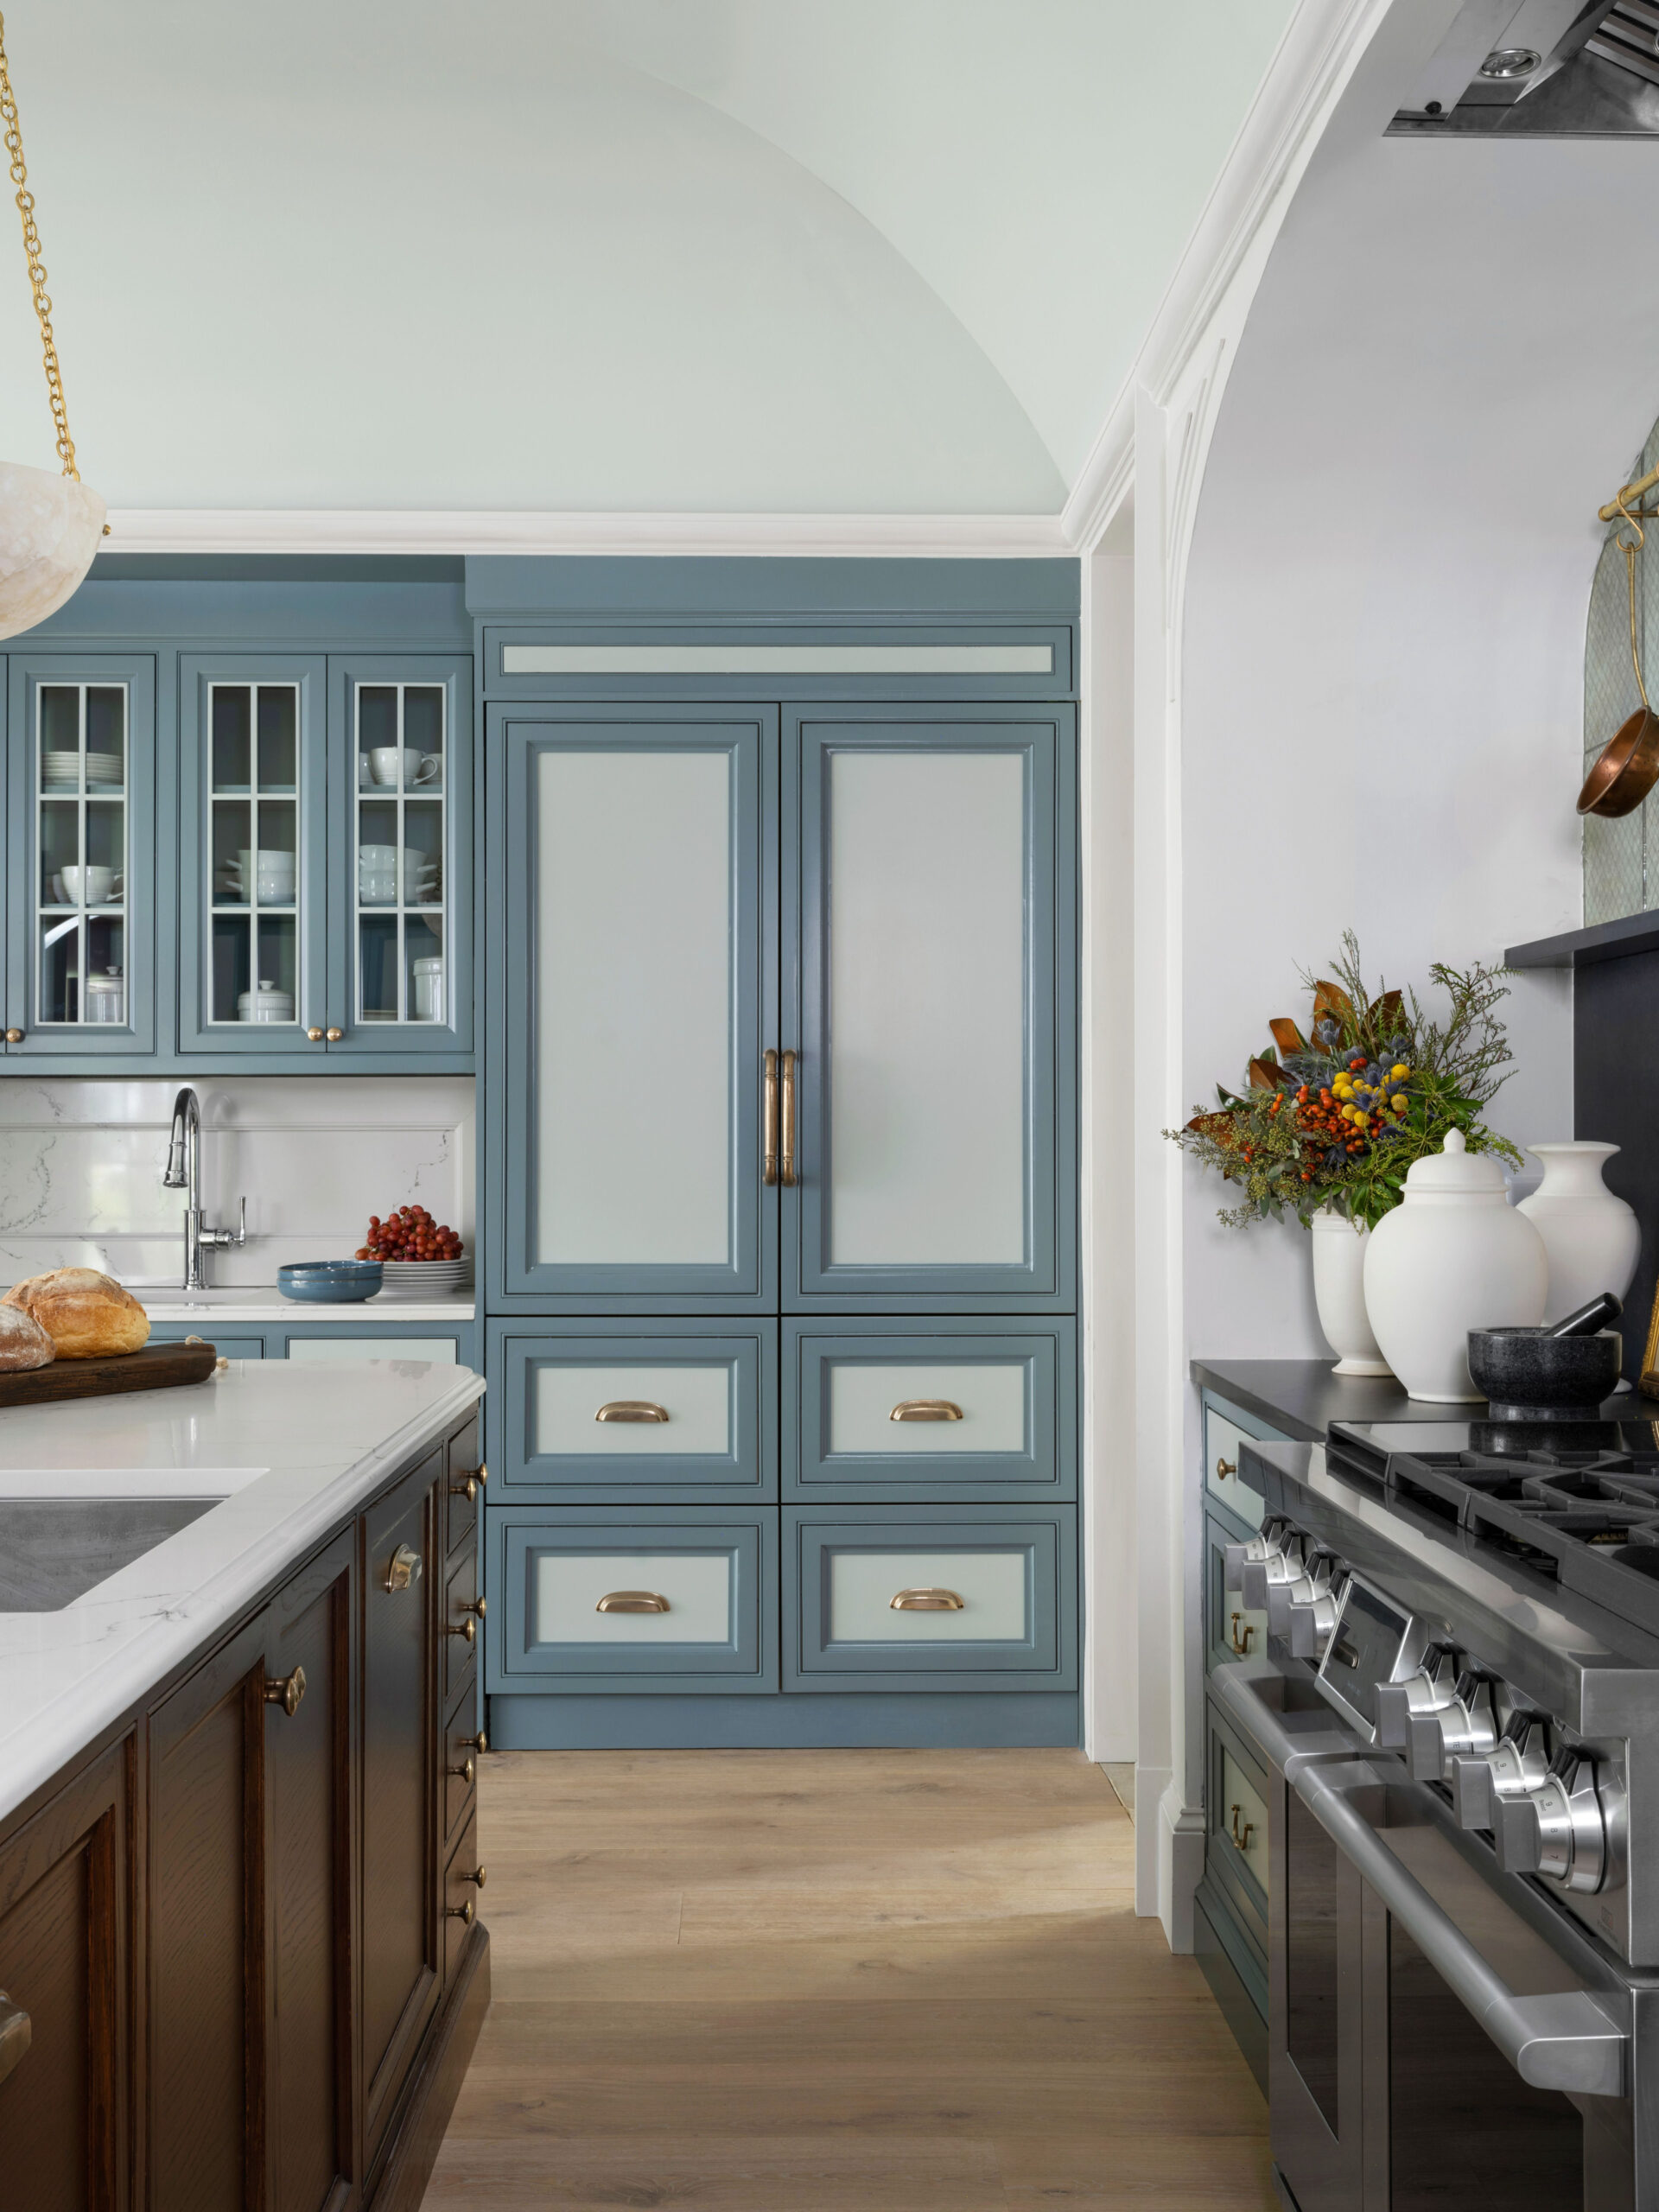 Best Kitchen Color Ideas , According to Interior Designers